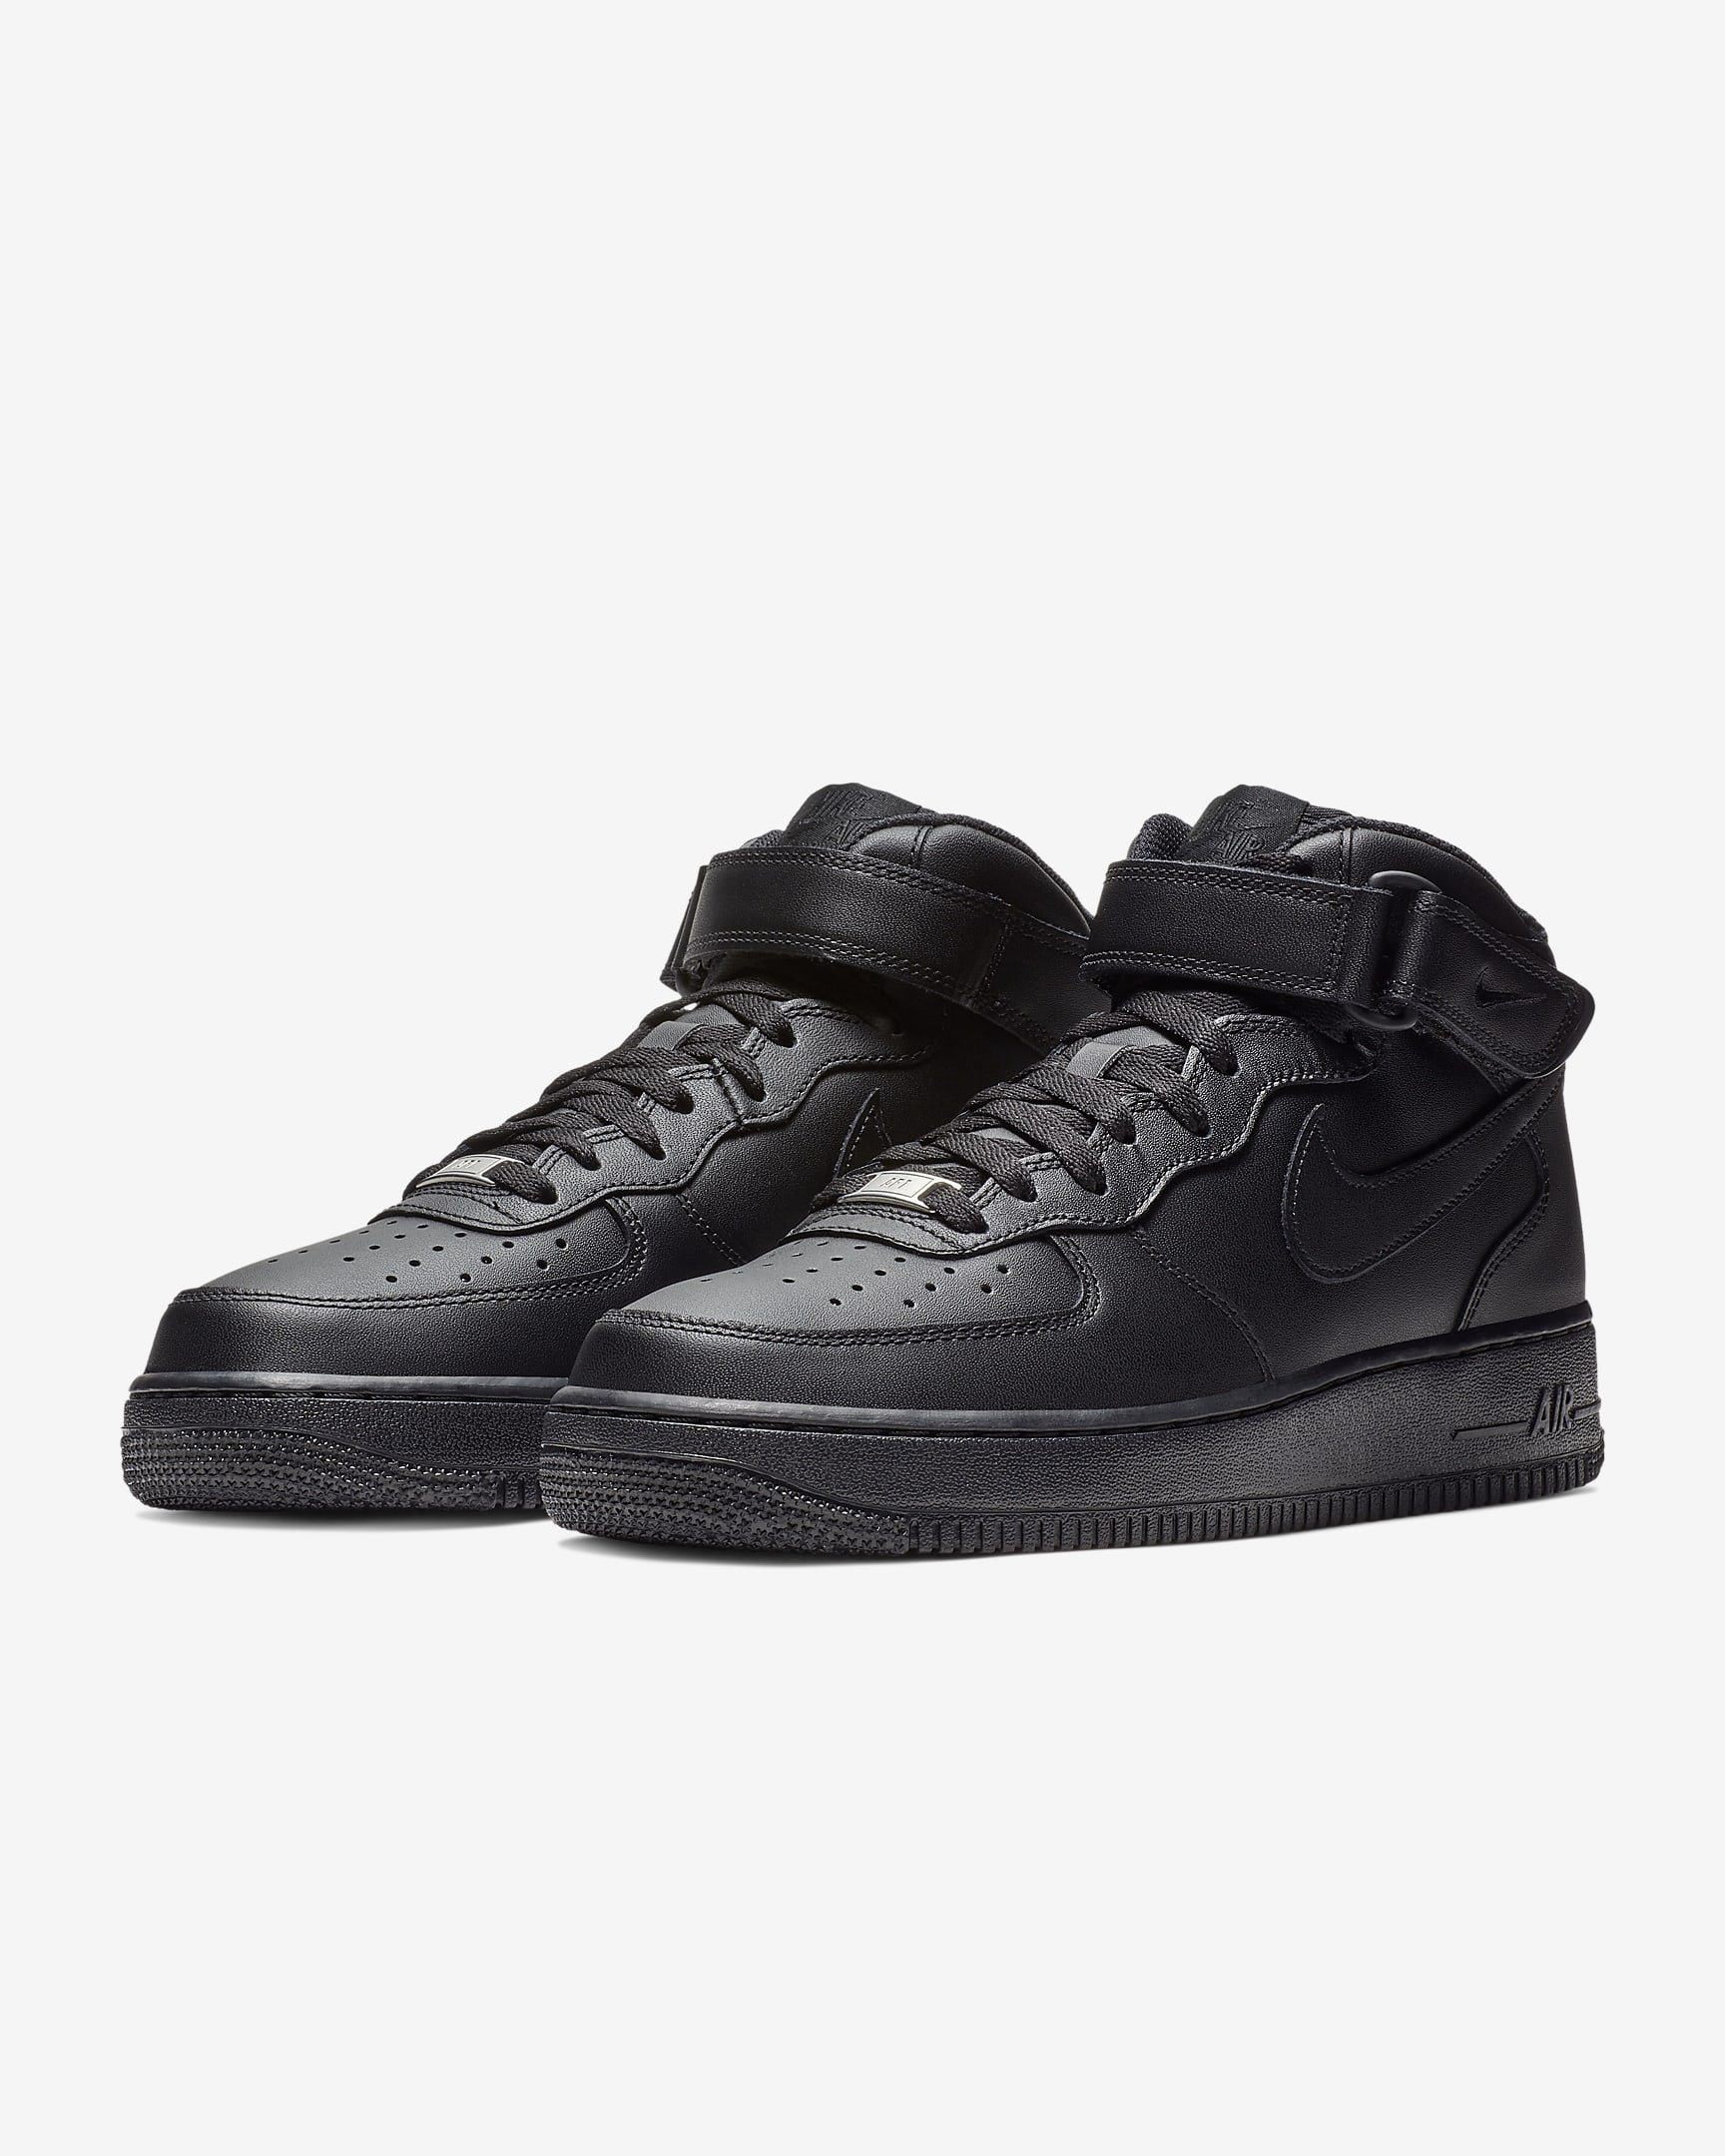 Nike Air Force 1 Mid '07 Men's Shoe - Black/Black